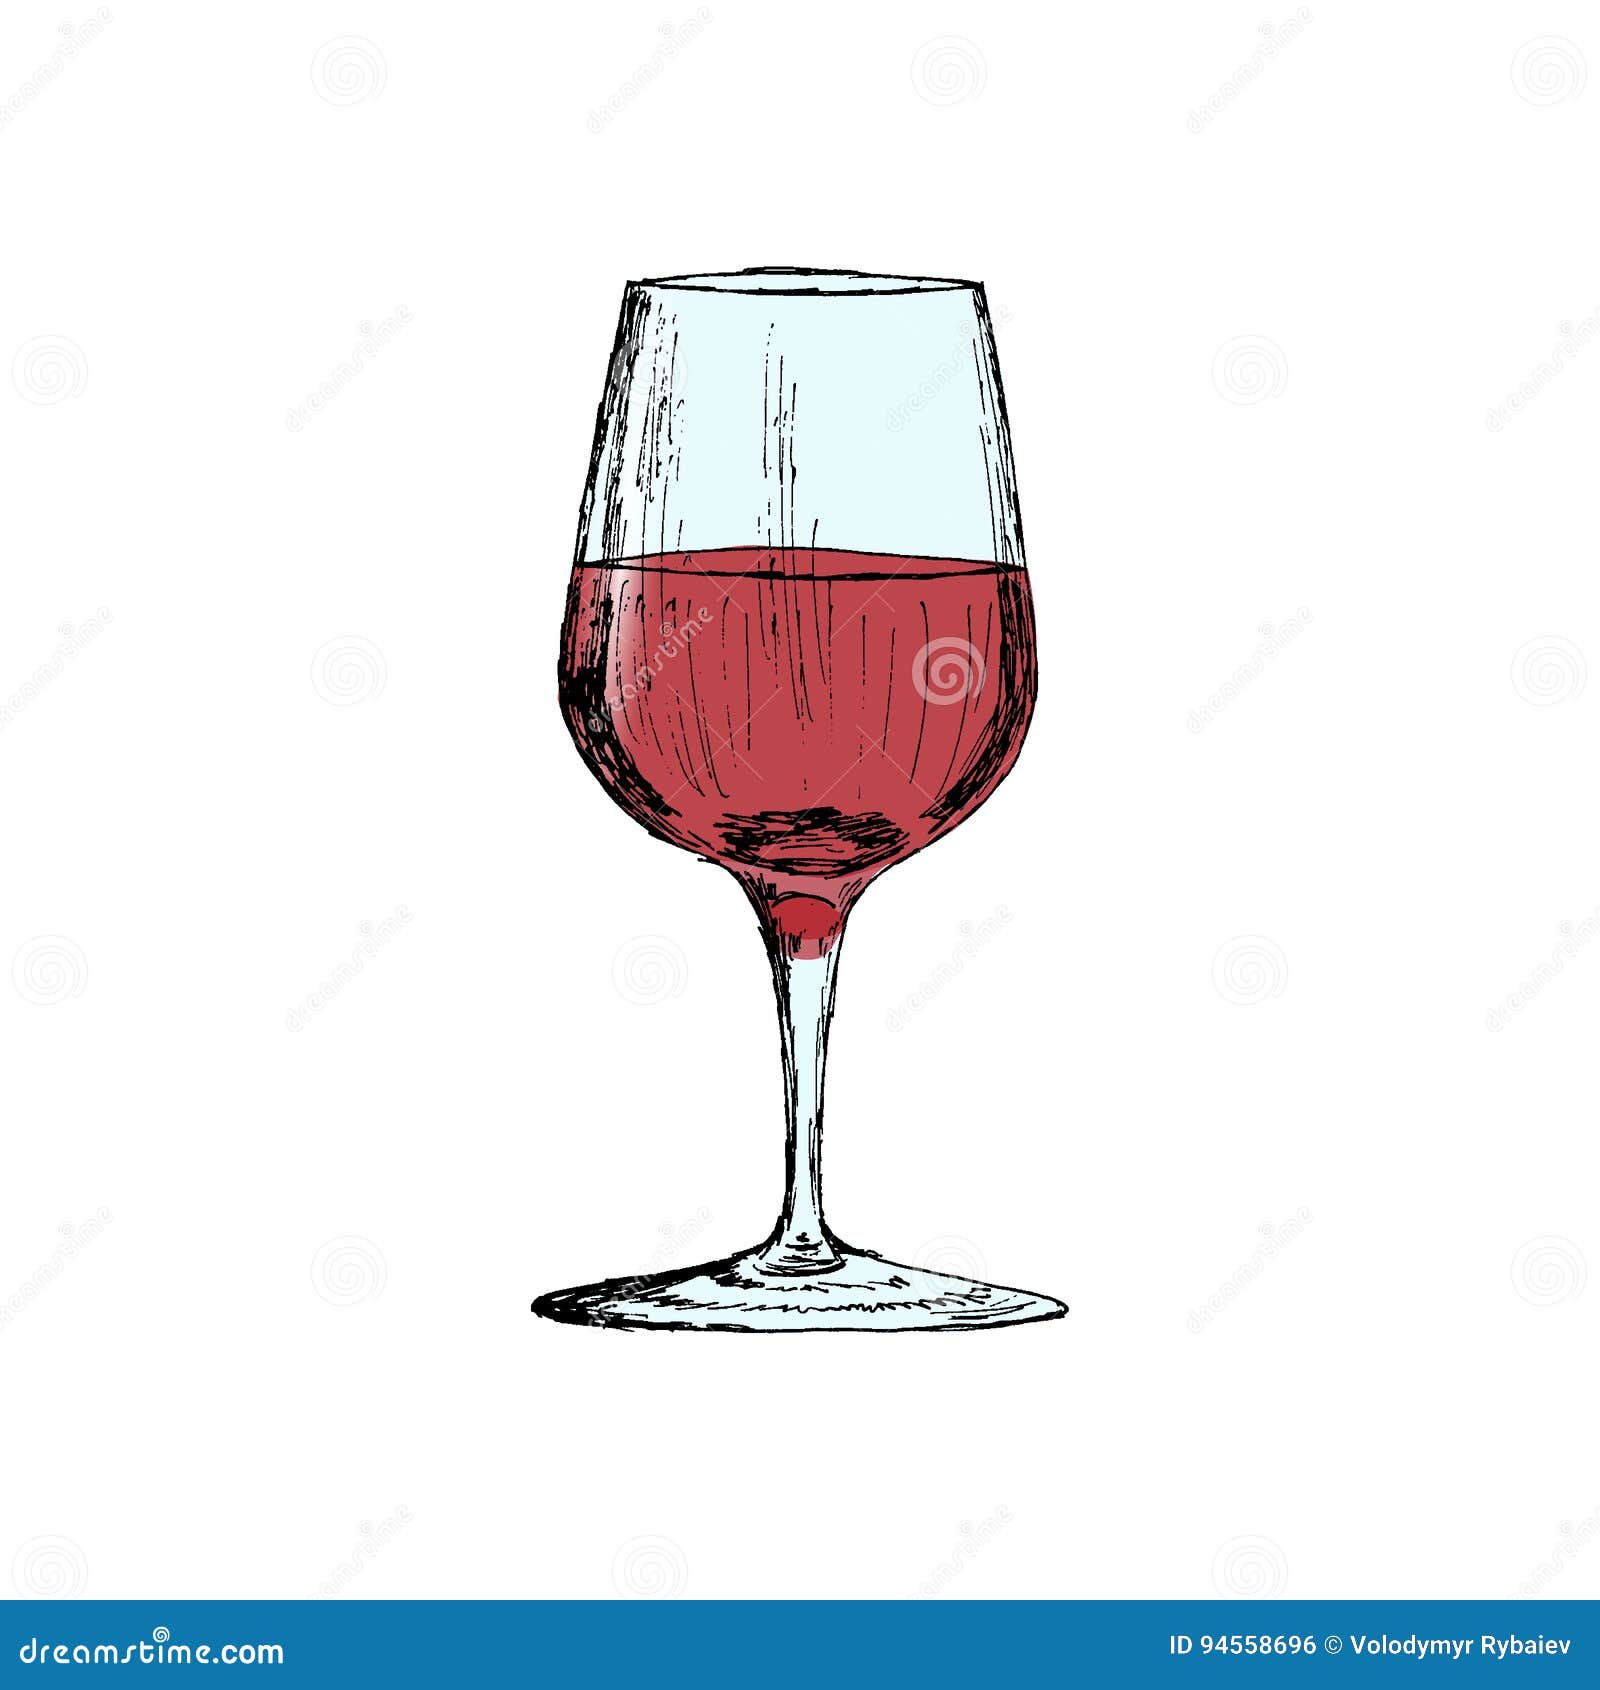 Wine glass drawing 🍷/Red wine glass drawing 2020 #shorts #drawings #drawing  #drawingtutorial #wine #wineglass #redwine | Wine glass drawing 🍷/Red wine  glass drawing 2020 #shorts #drawings #drawing #drawingtutorial #wine # wineglass #redwine |